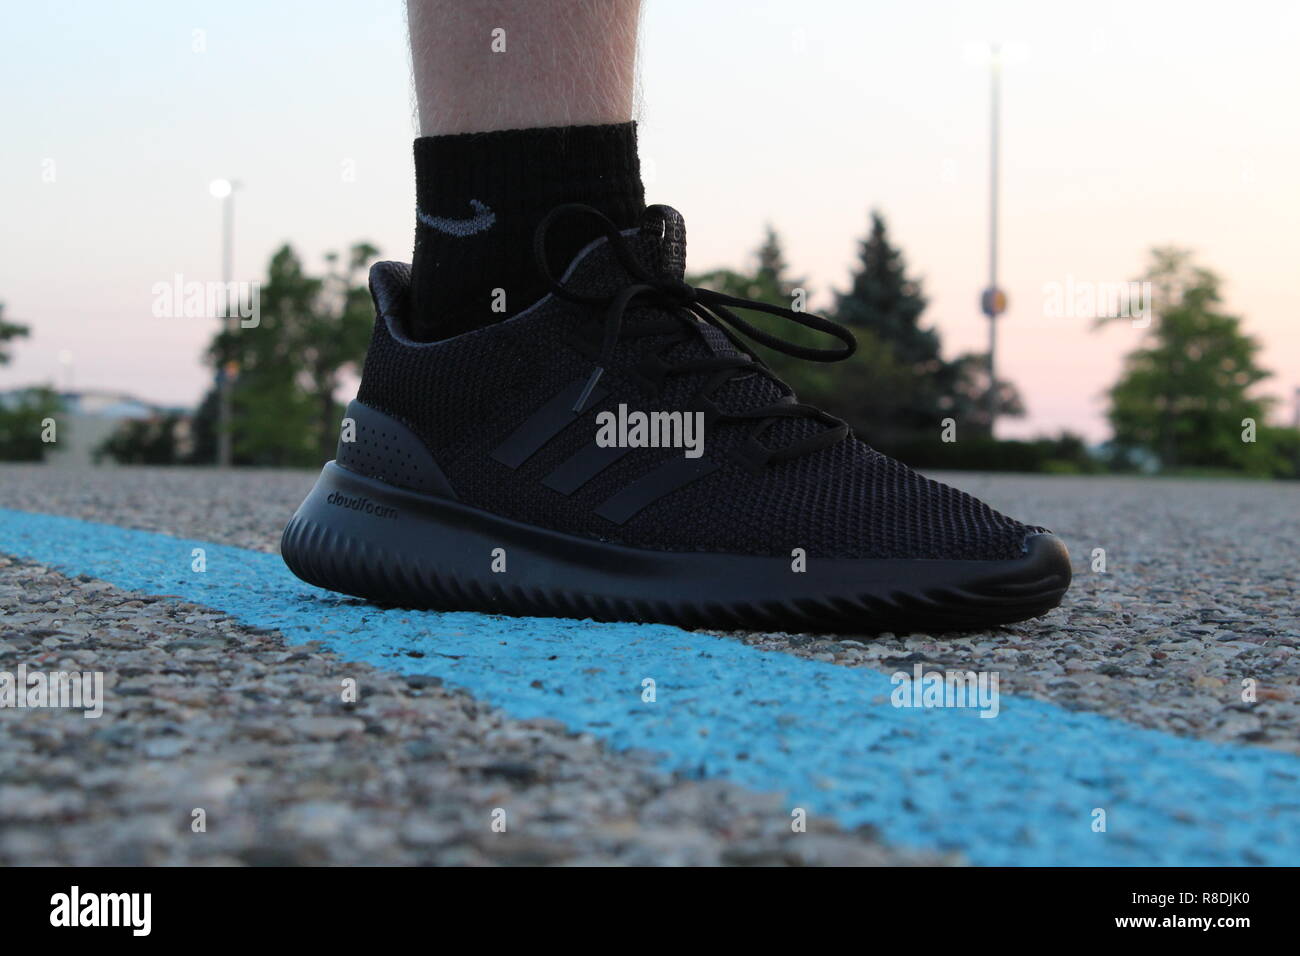 adidas cloudfoam ultimate running shoe